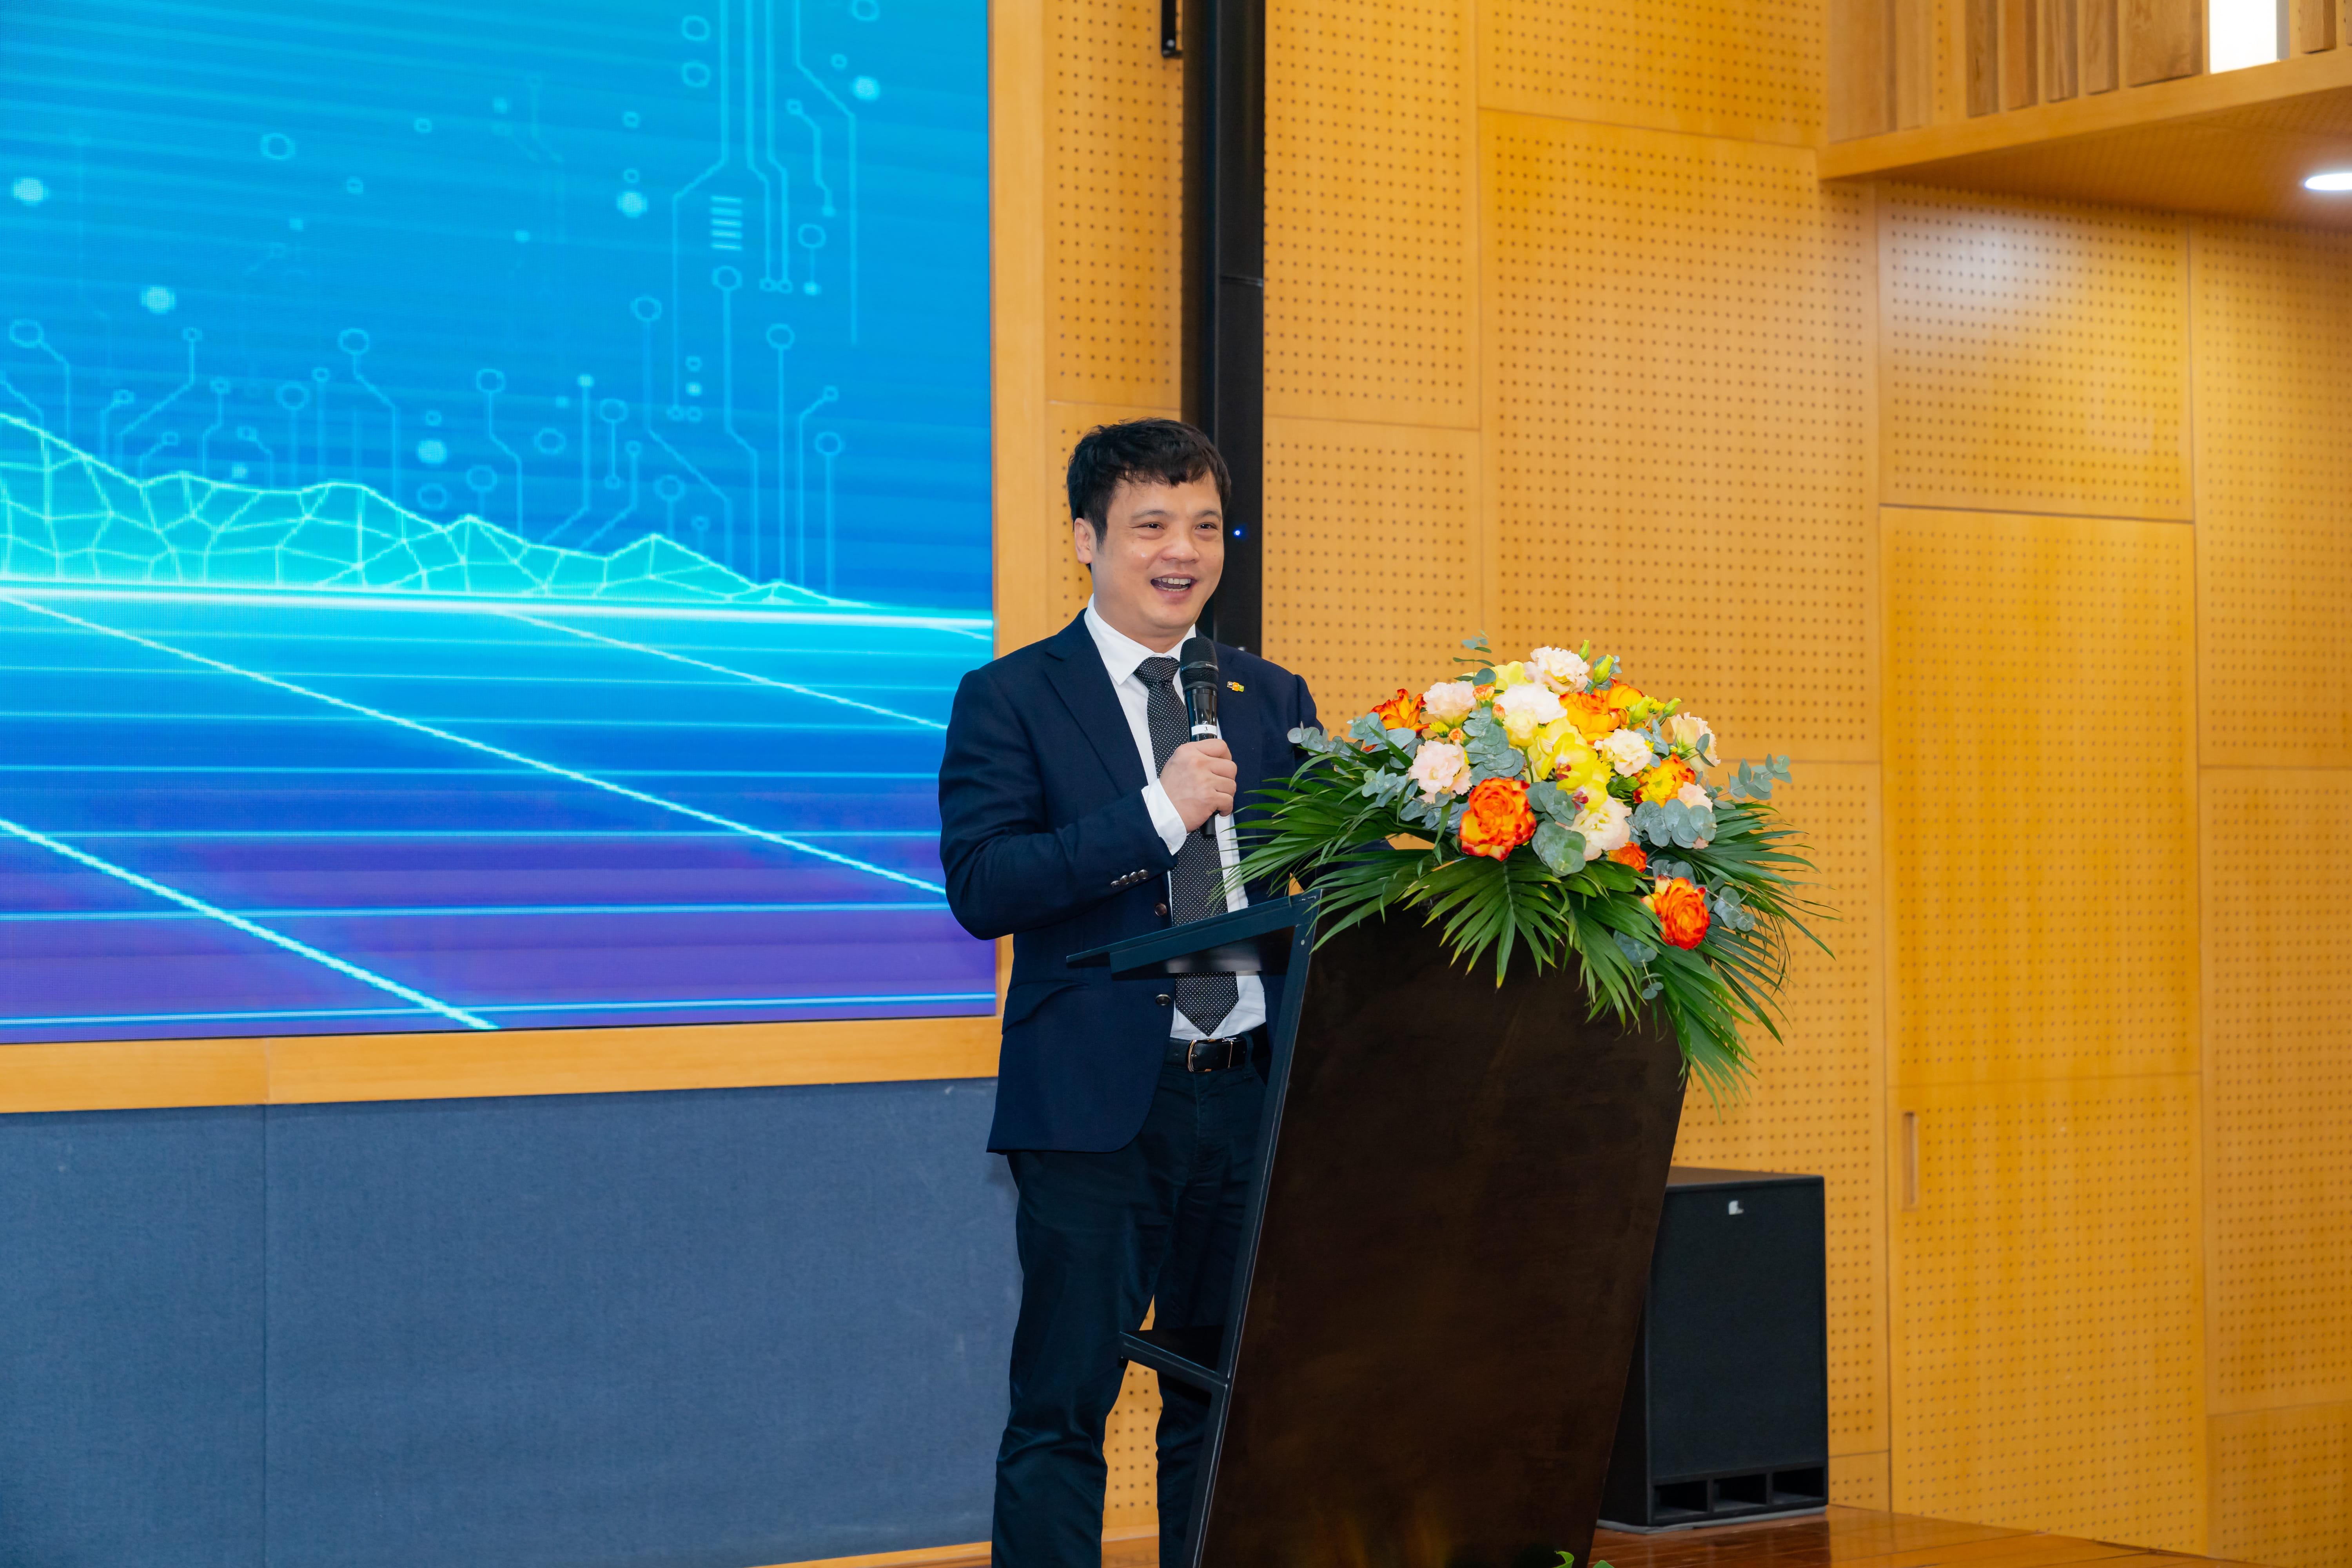 Mr. Nguyen Van Khoa - CEO of FPT Corporation - spoke at the event